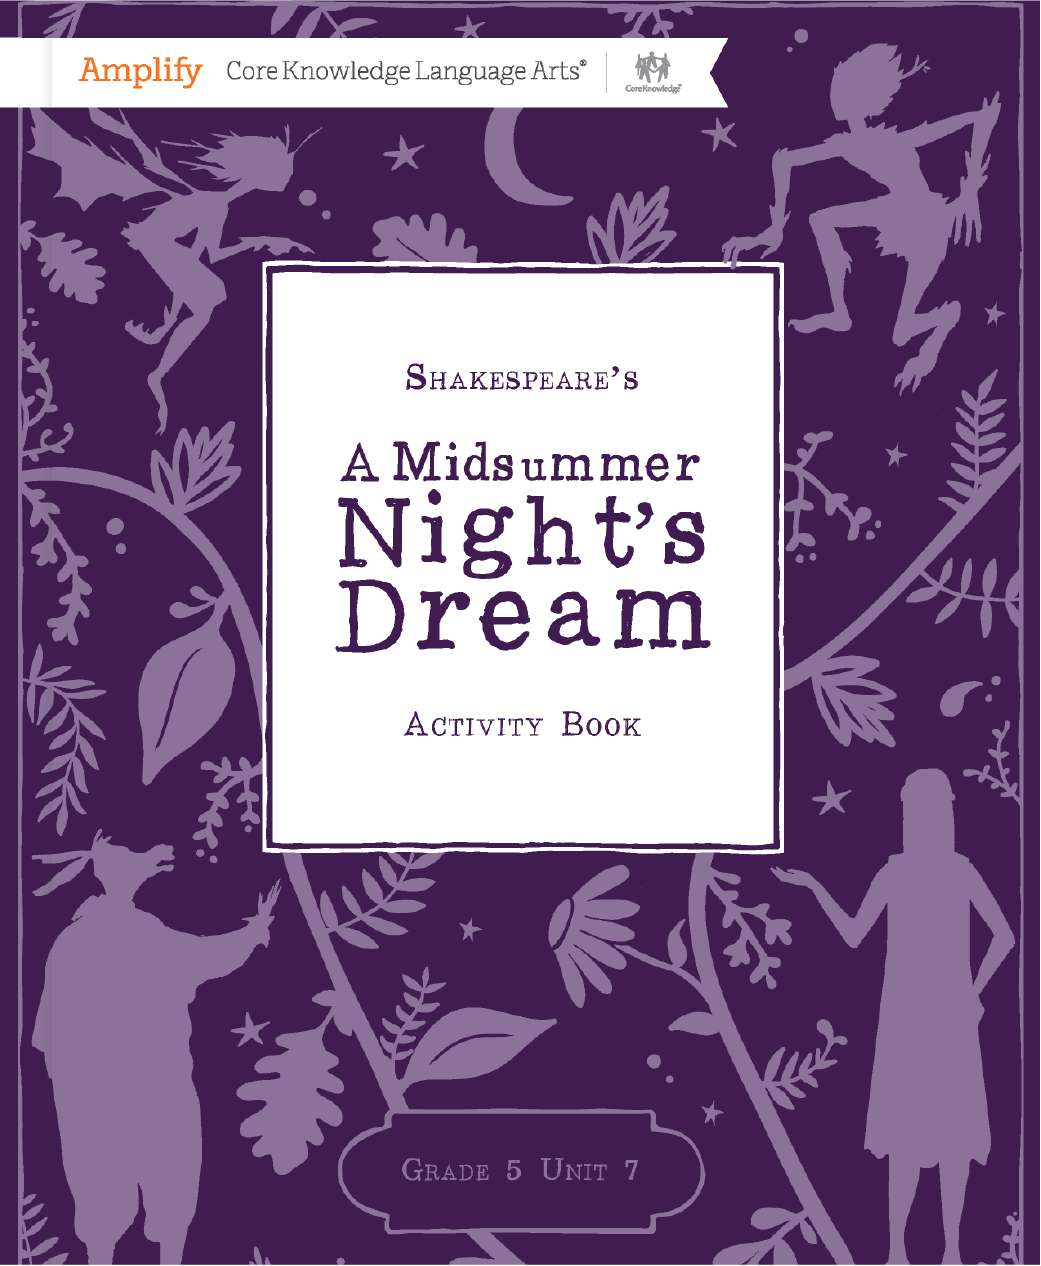 Shakespeare's A Midsummer Night's Dream Activity Book